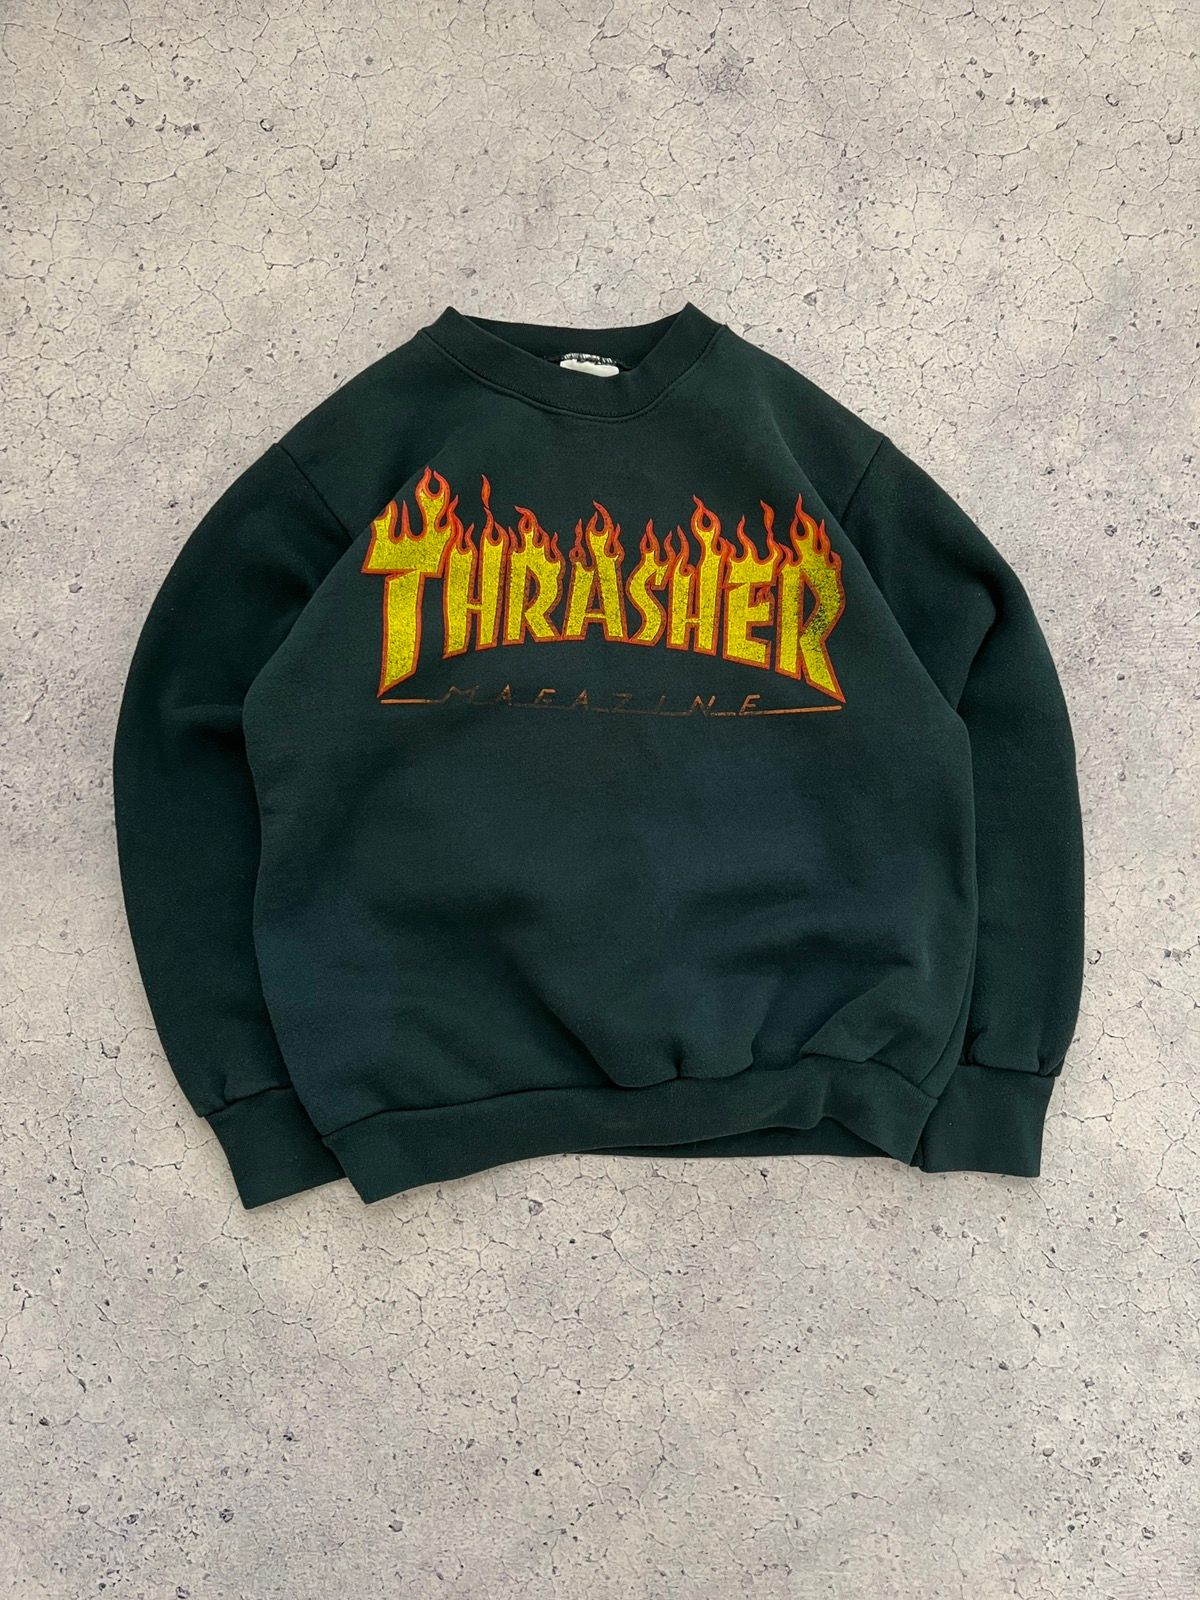 Vintage ❗️VERY RARE❗️ THRASHER 90’s OG Crewneck Sweatshirt Made In USA Size US S / EU 44-46 / 1 - 1 Preview